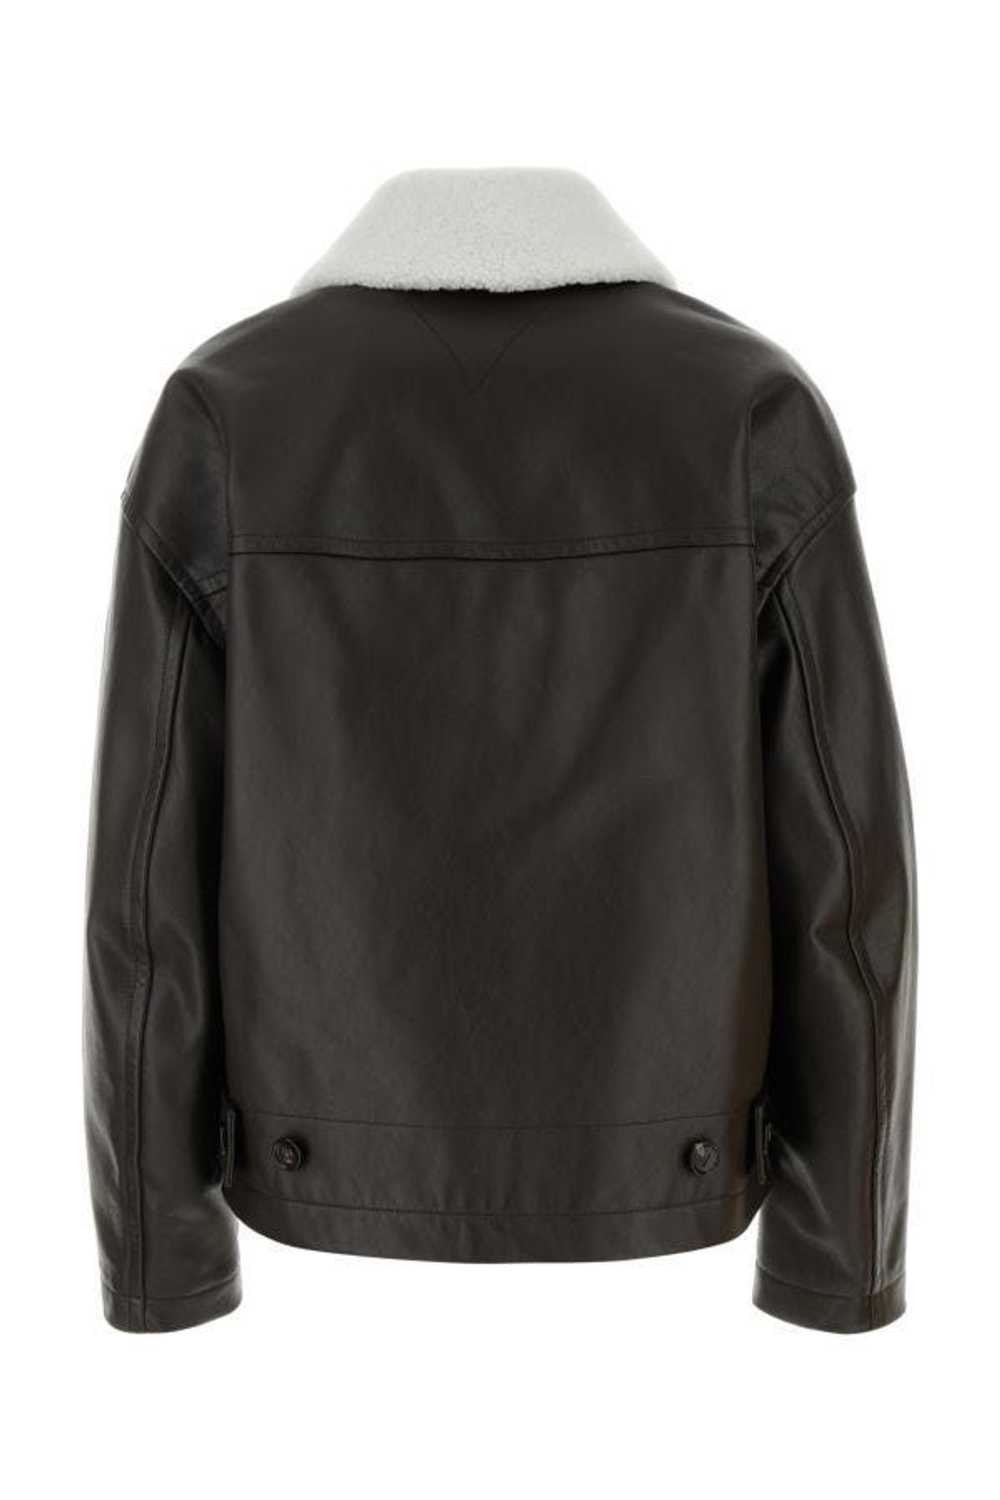 Bottega Veneta Dark Brown Leather Jacket - image 4